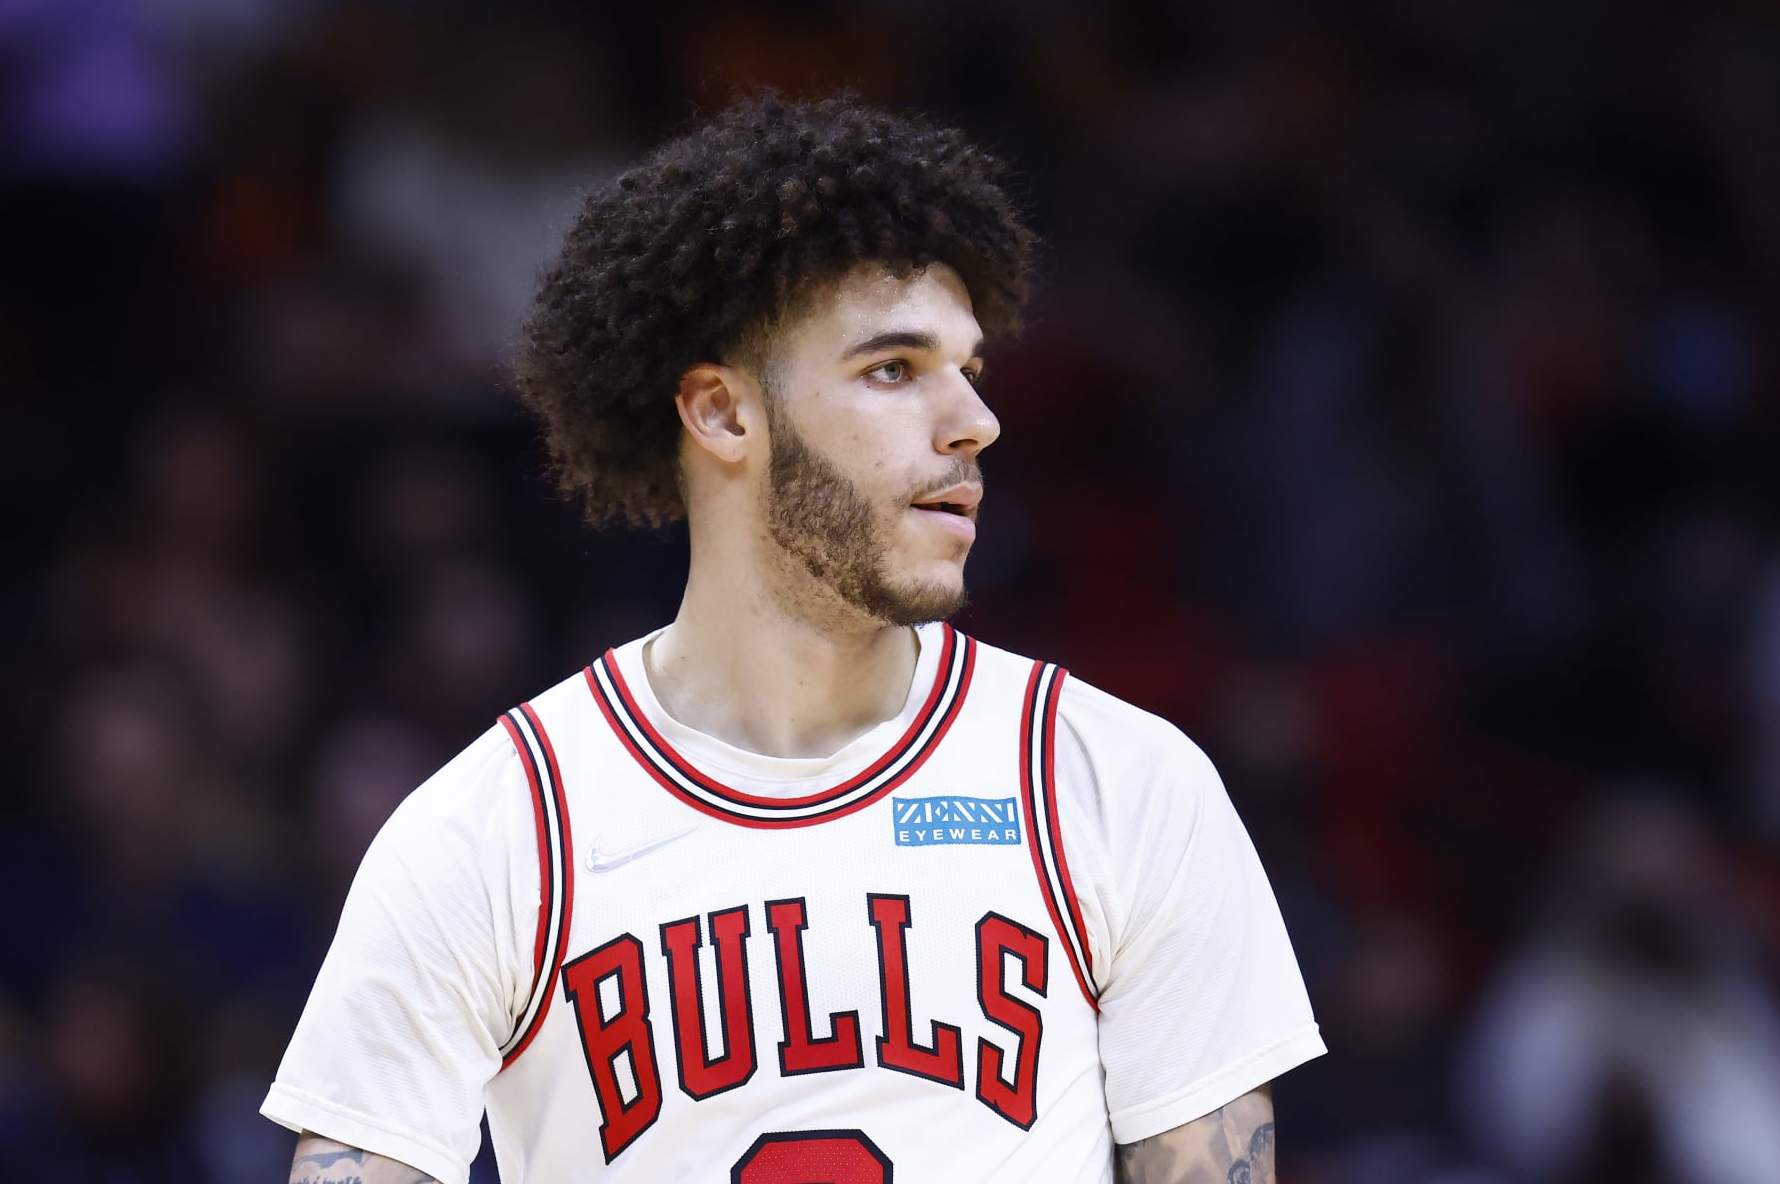 Bulls Executive Has Heartbreaking Update On Lonzo Ball's Future